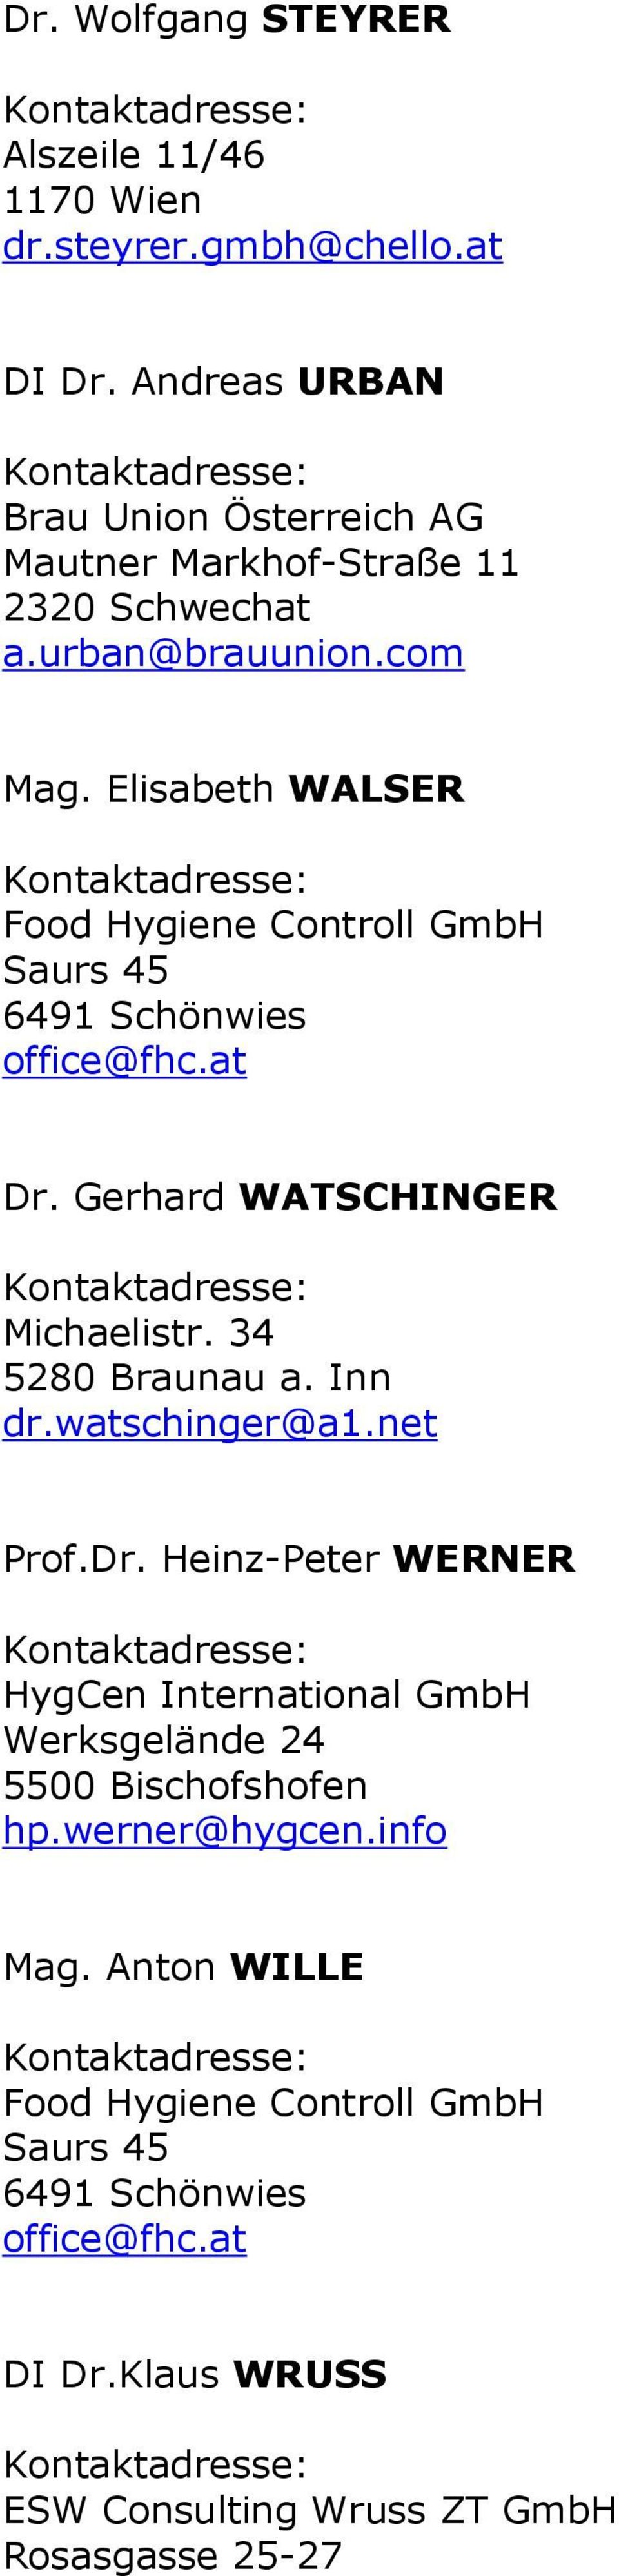 Elisabeth WALSER Food Hygiene Controll GmbH Saurs 45 6491 Schönwies office@fhc.at Dr. Gerhard WATSCHINGER Michaelistr. 34 5280 Braunau a. Inn dr.